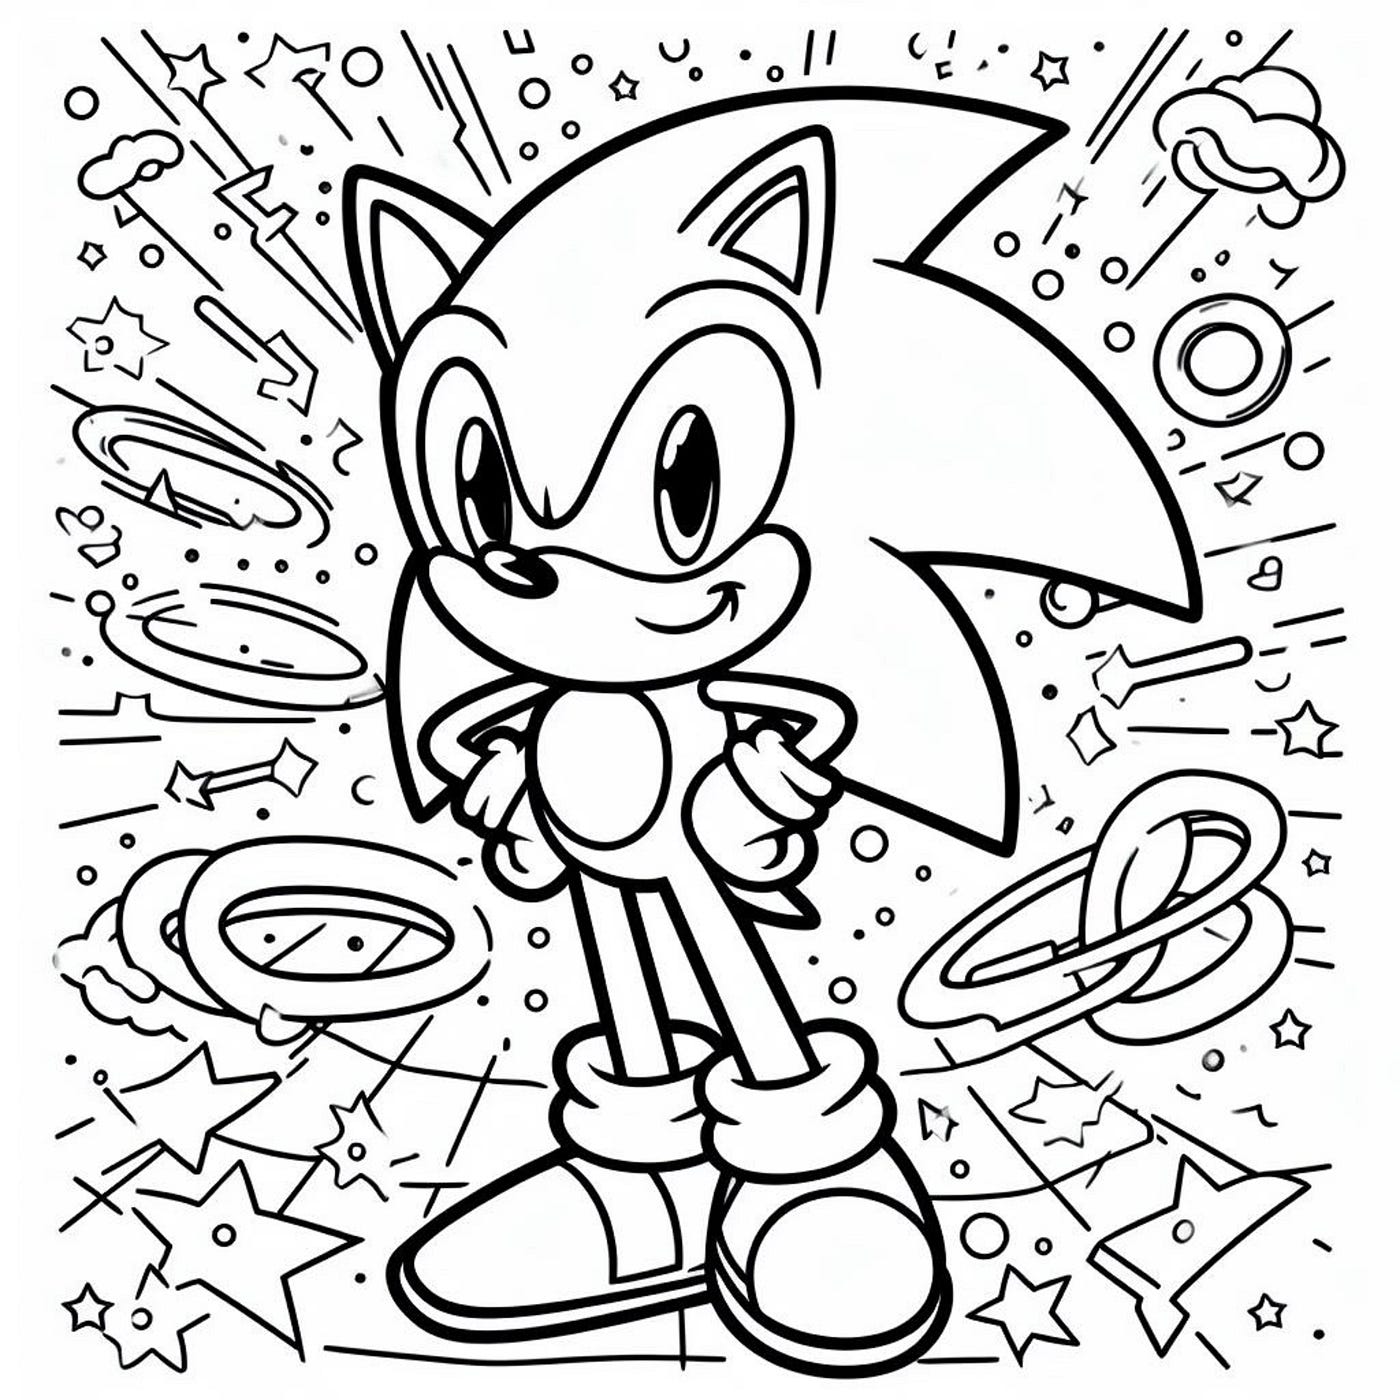 Sonic em missão numa aldeia remota - Retornar à infância - Coloring Pages  for Adults